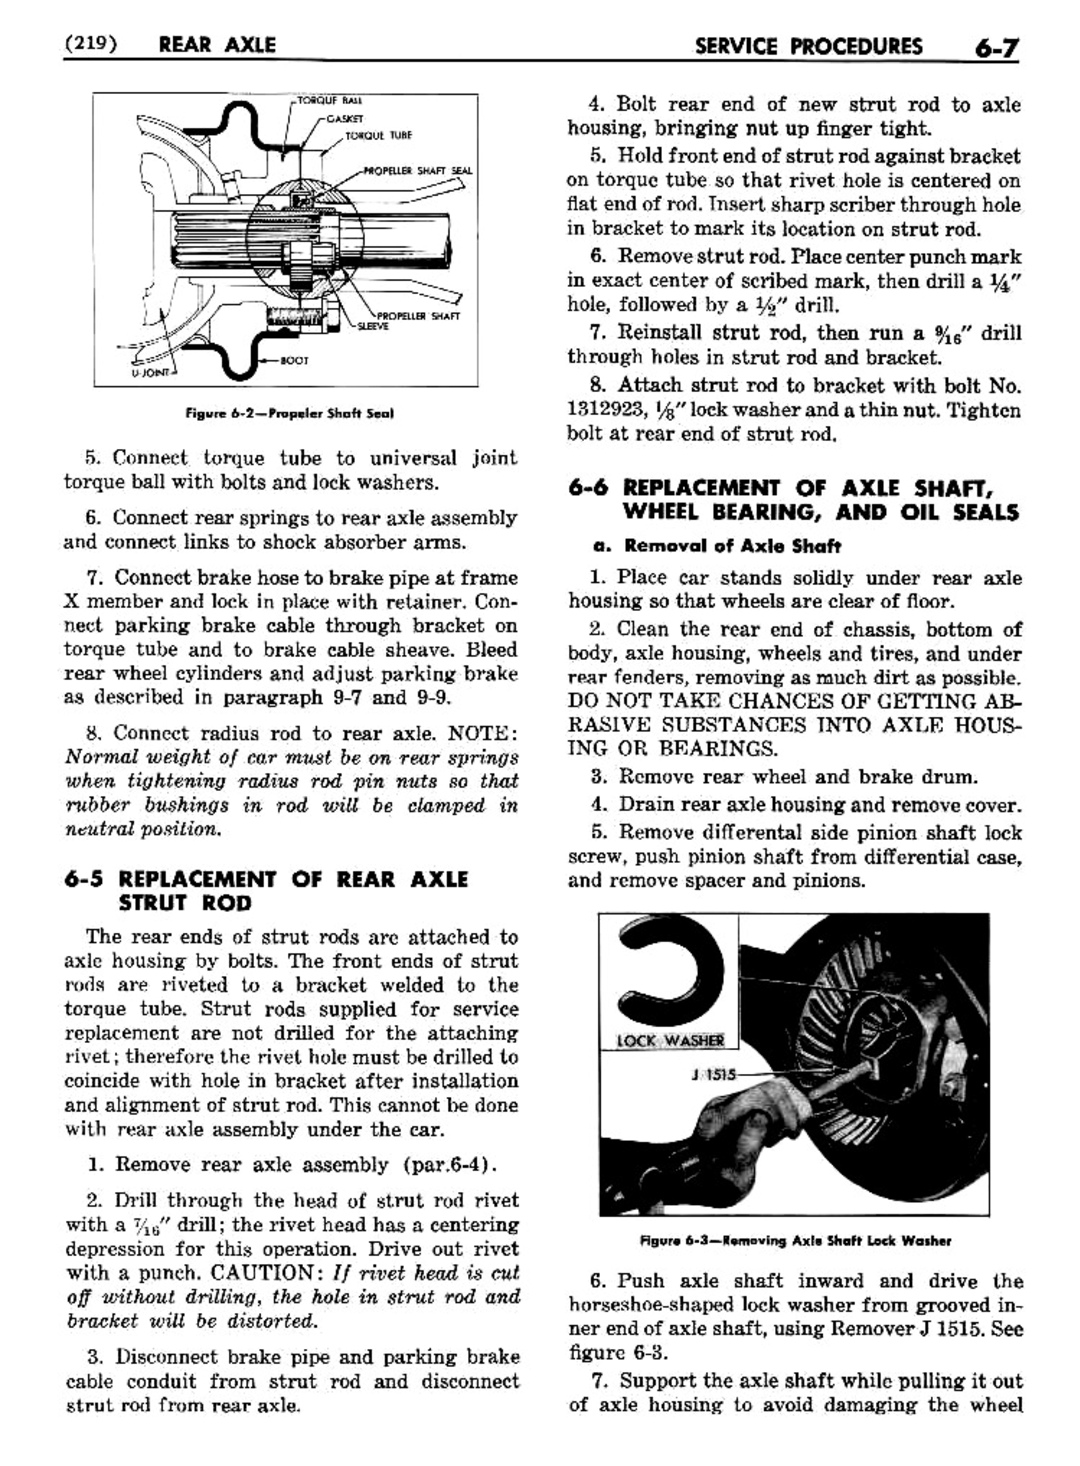 n_07 1954 Buick Shop Manual - Rear Axle-007-007.jpg